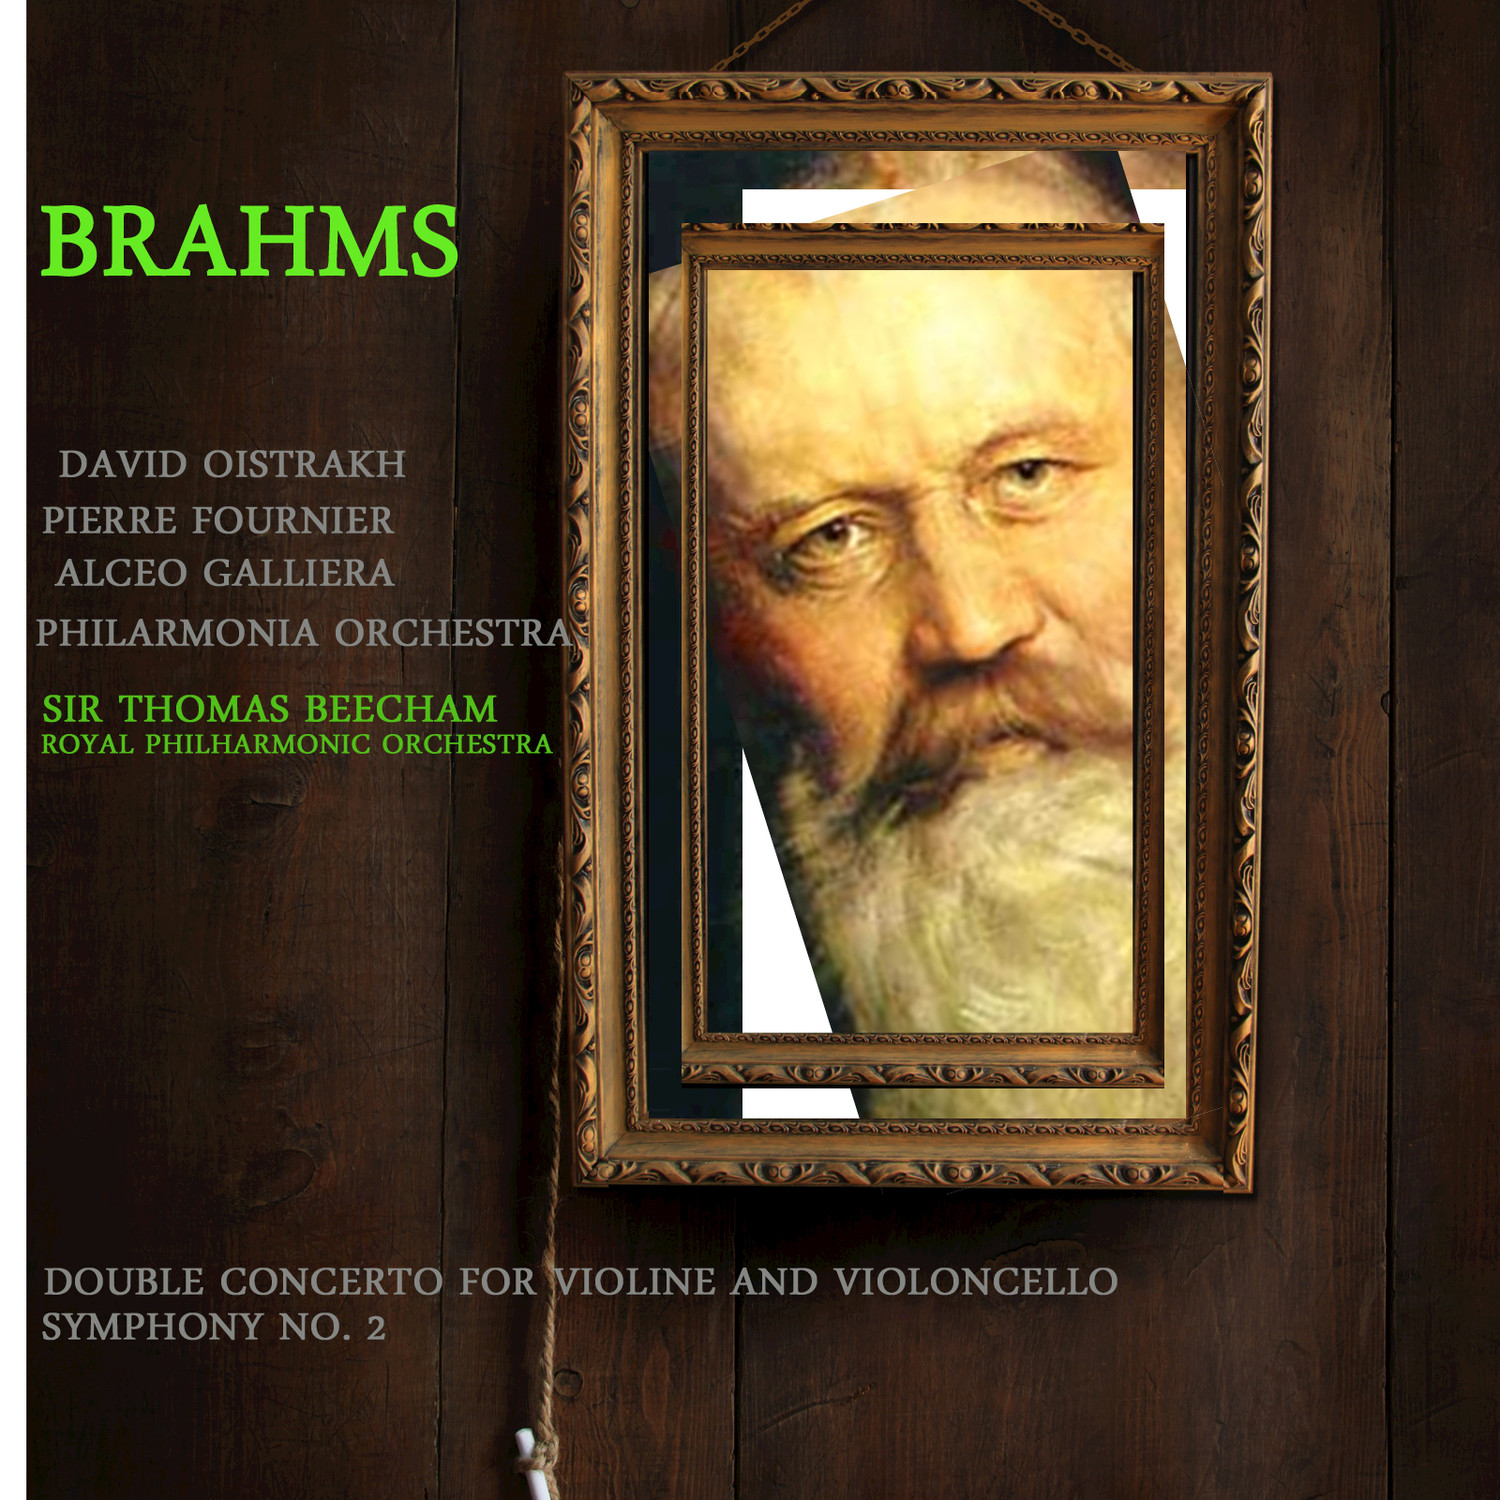 Brahms: Double Concerto for Violine and Violoncello & Symphony No. 2